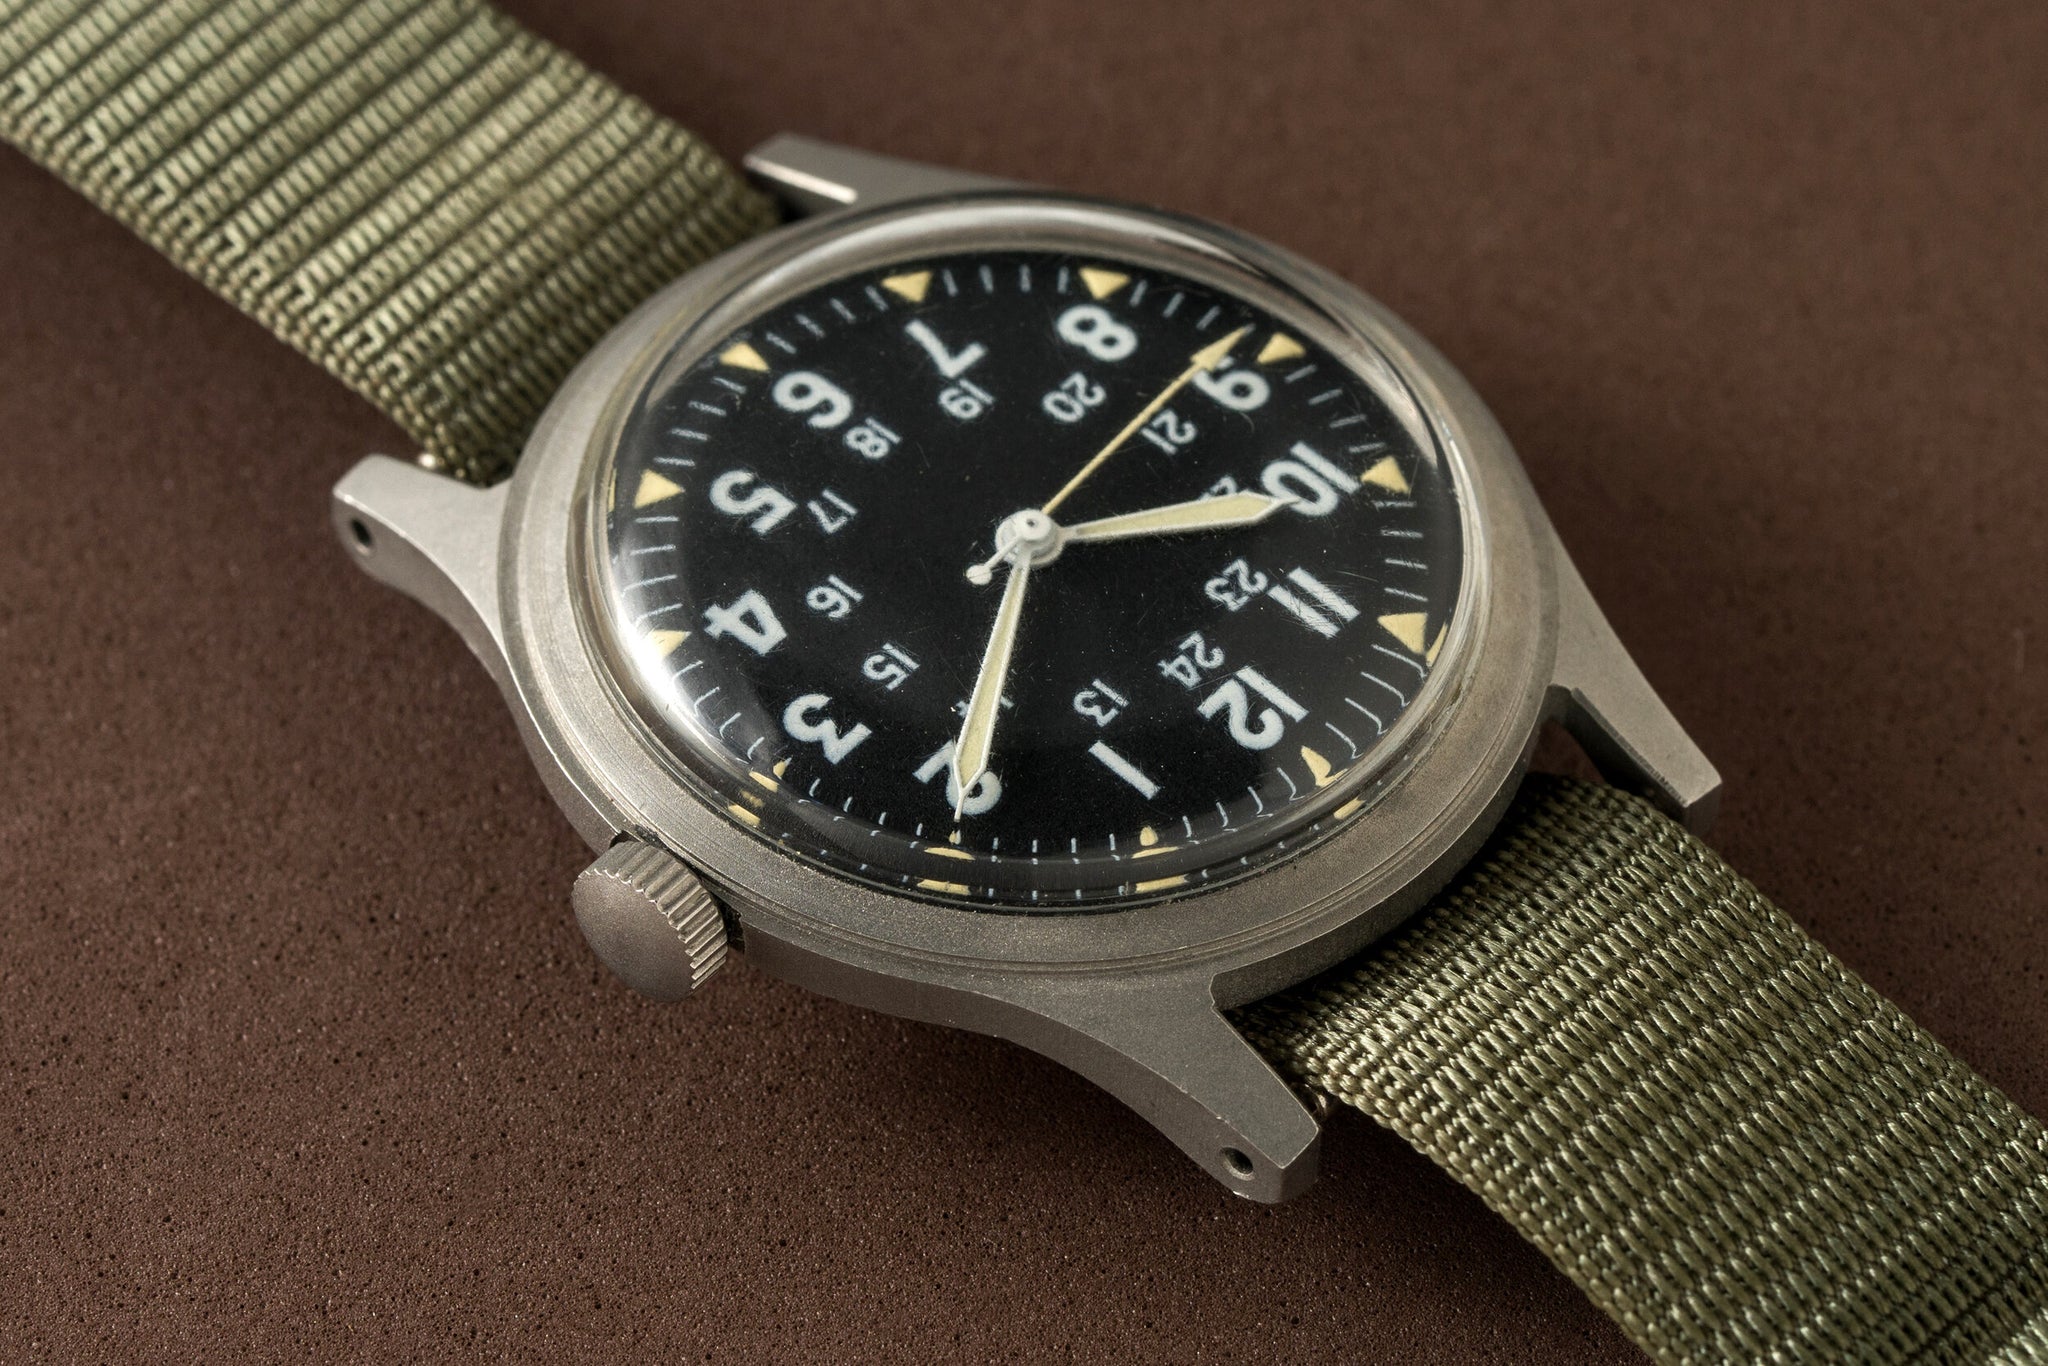 Benrus Military - GG-W-113 - 1969 